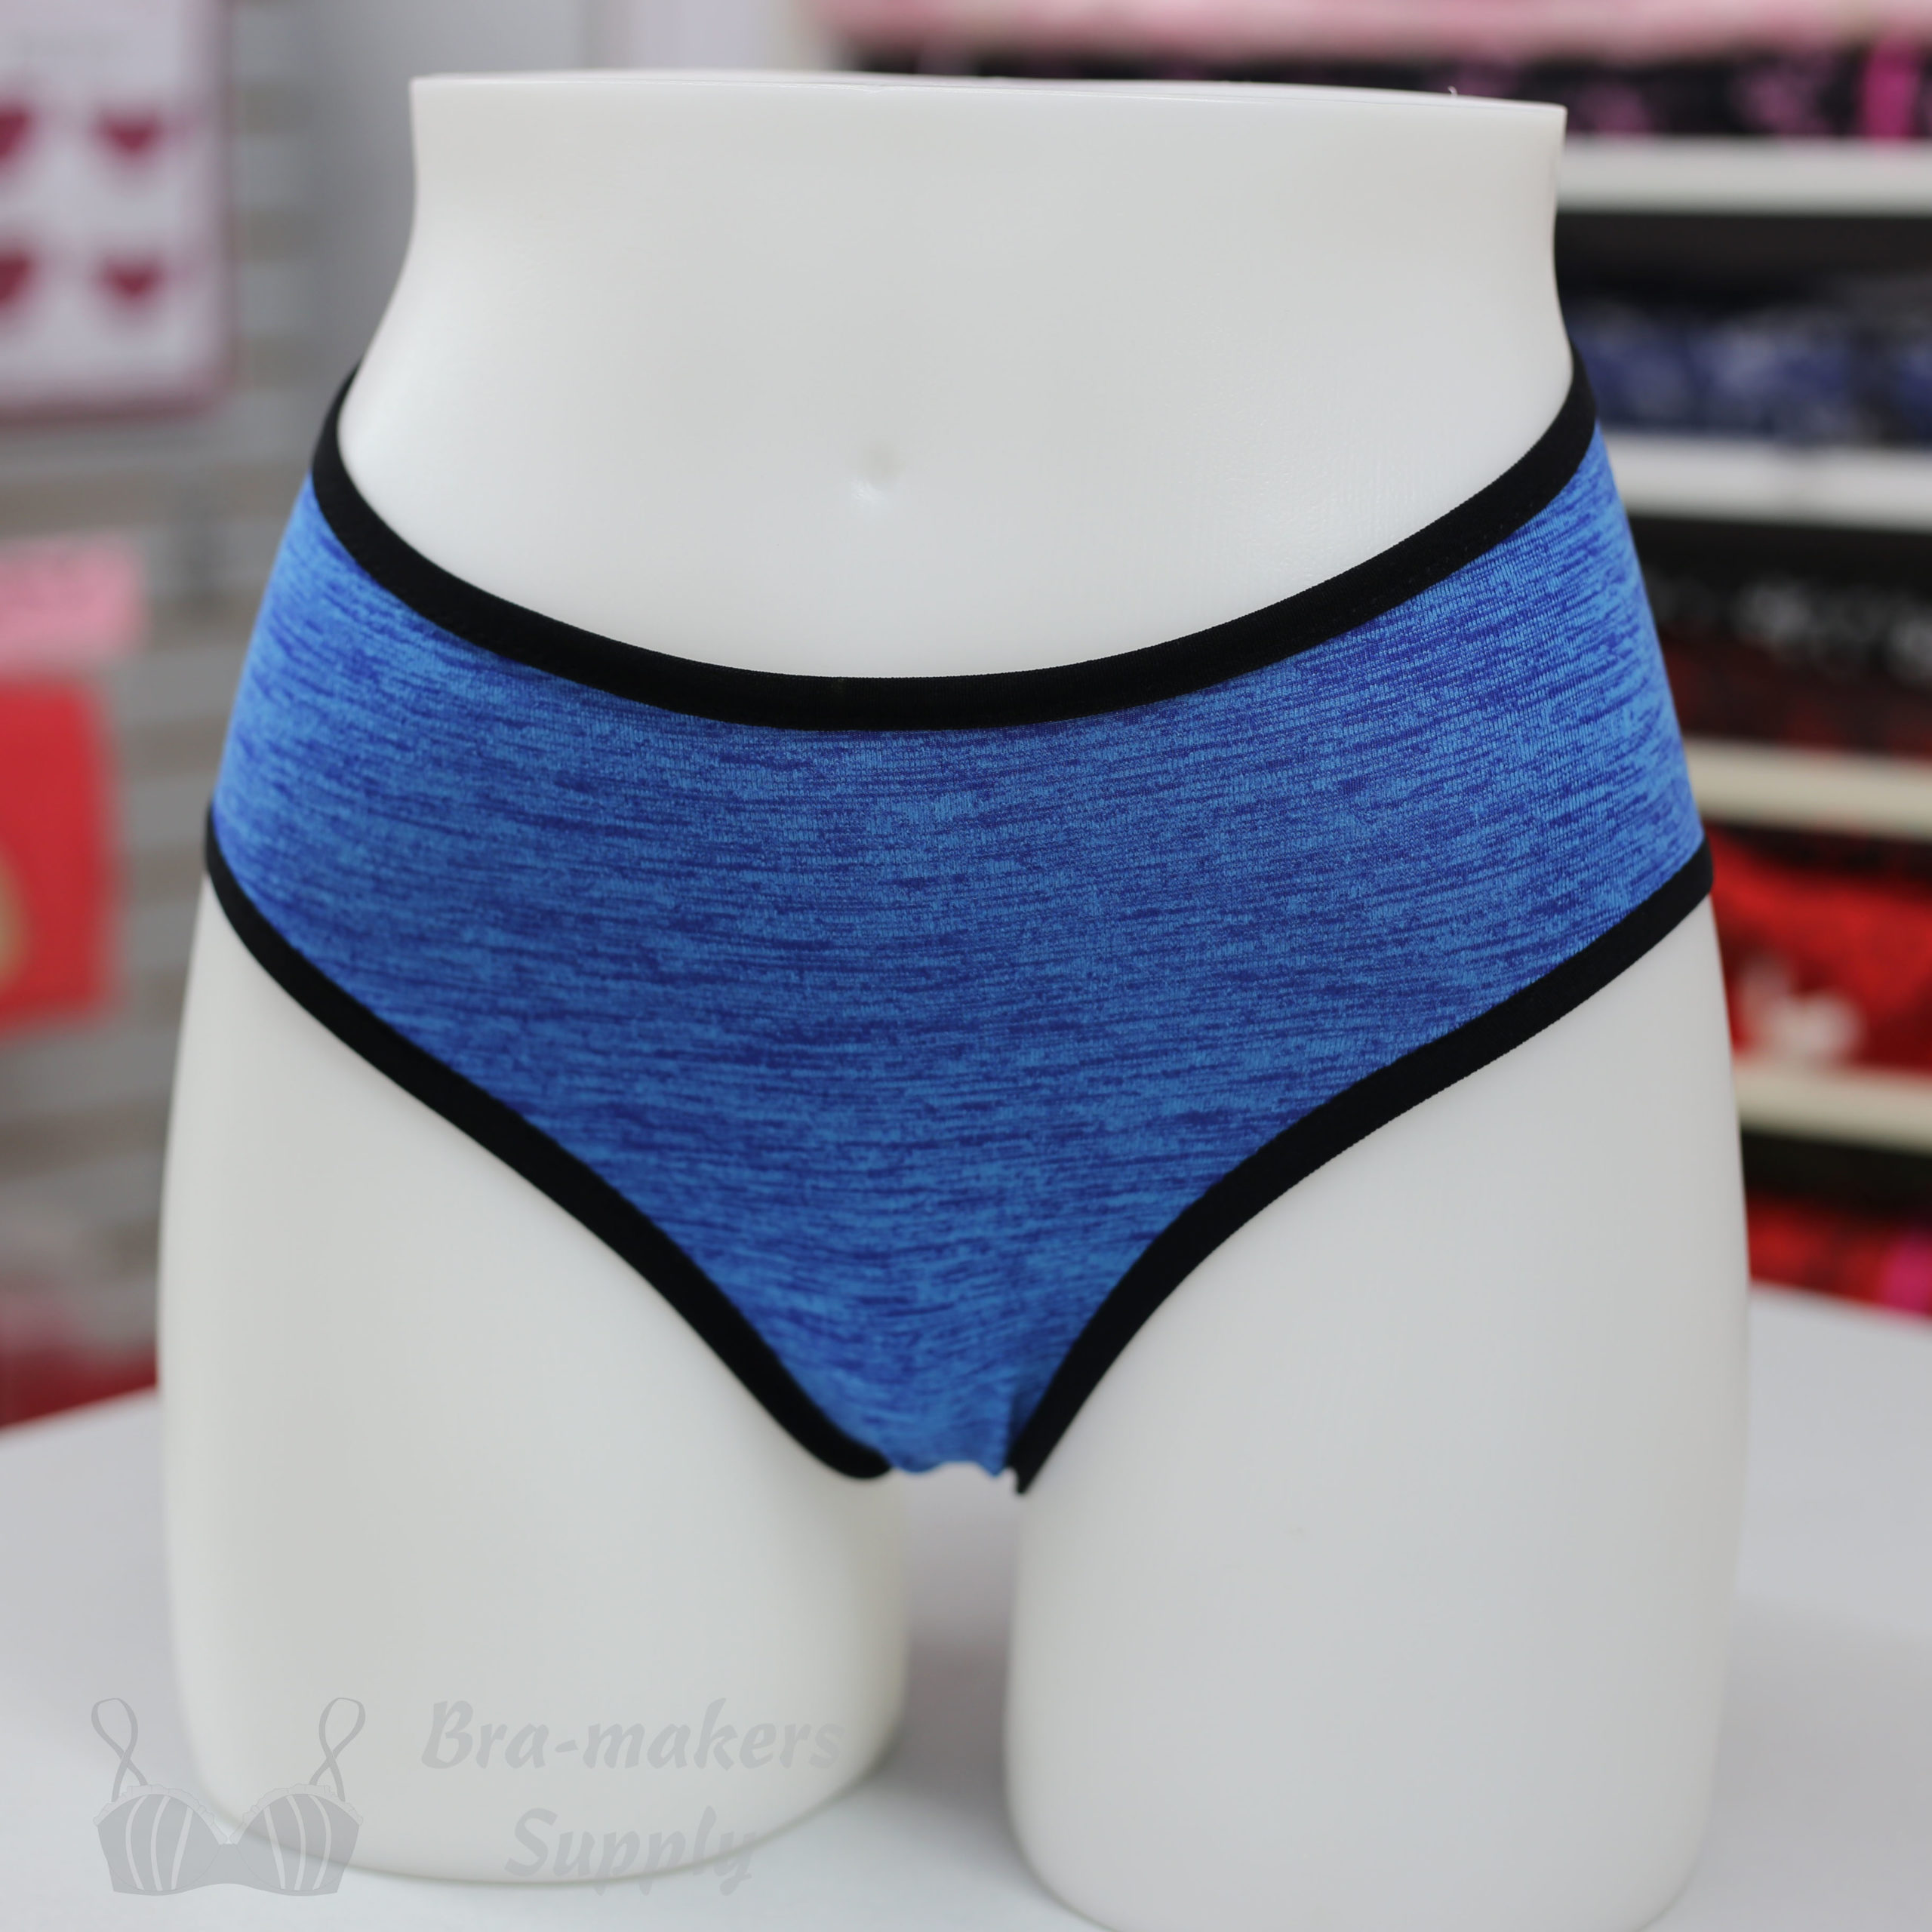 Cheryl Back Seam Panty Pattern - pattern by Bra-Makers Supply